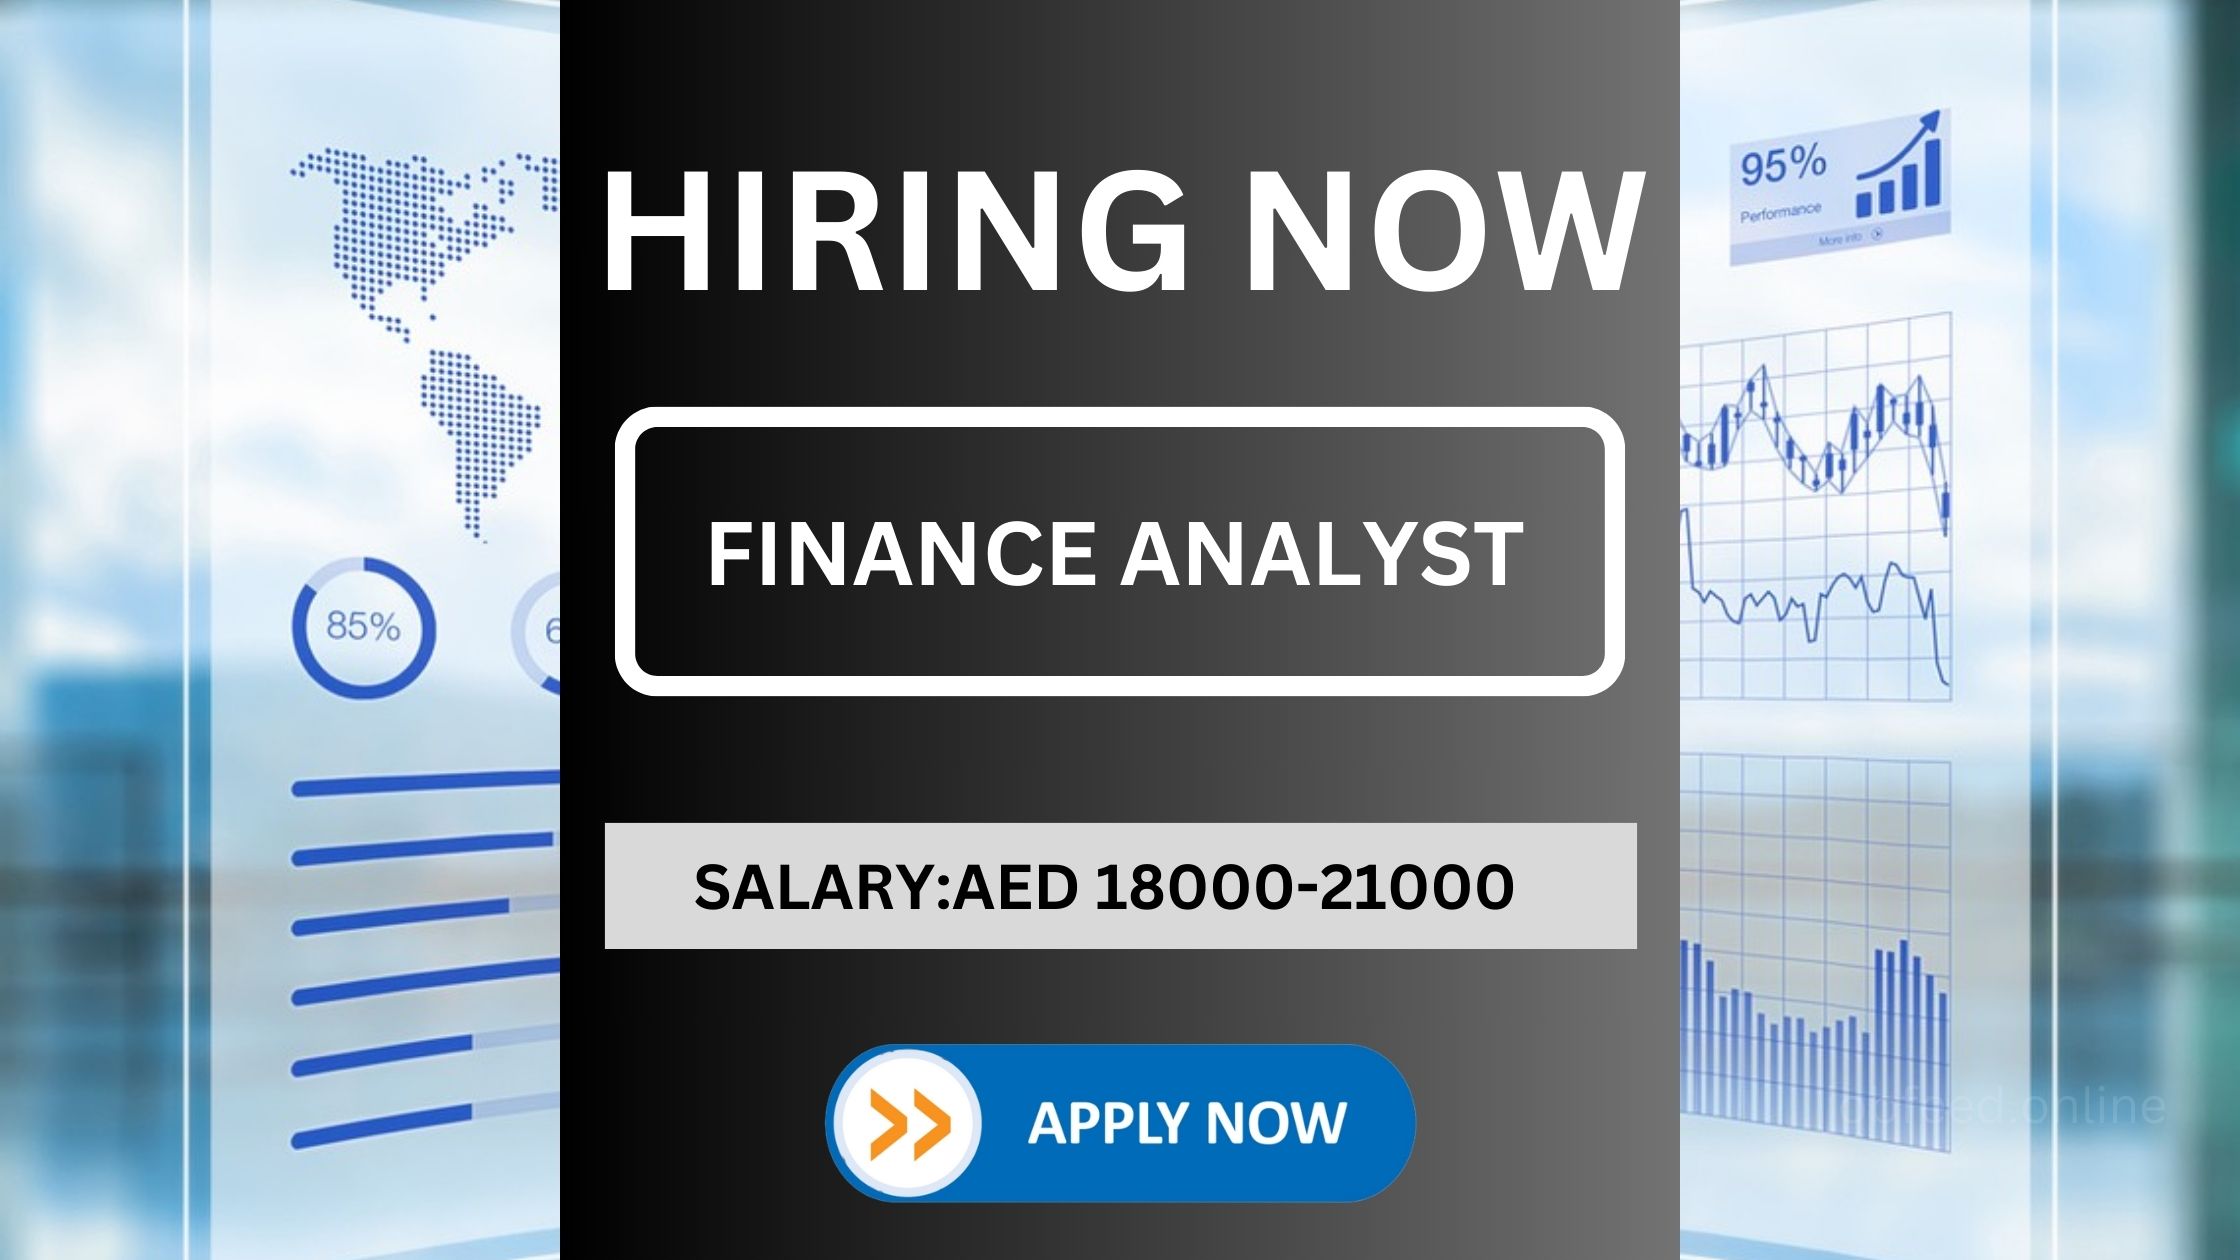 Finance Analyst Job Vacancy In Dubai salary 18000 to 21000